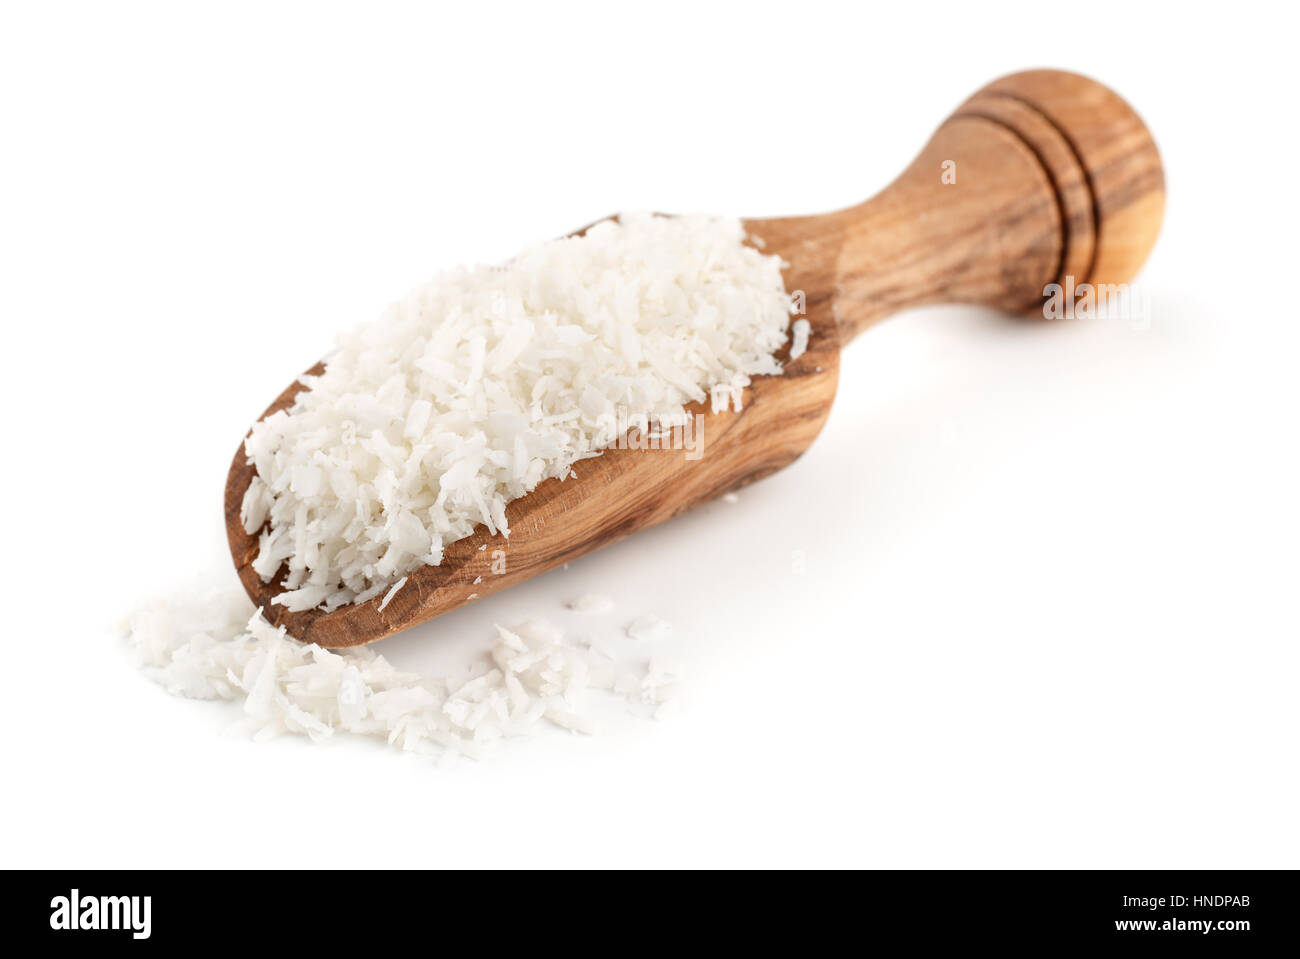 Wooden scoop full of coconut shavings isolated on white Stock Photo